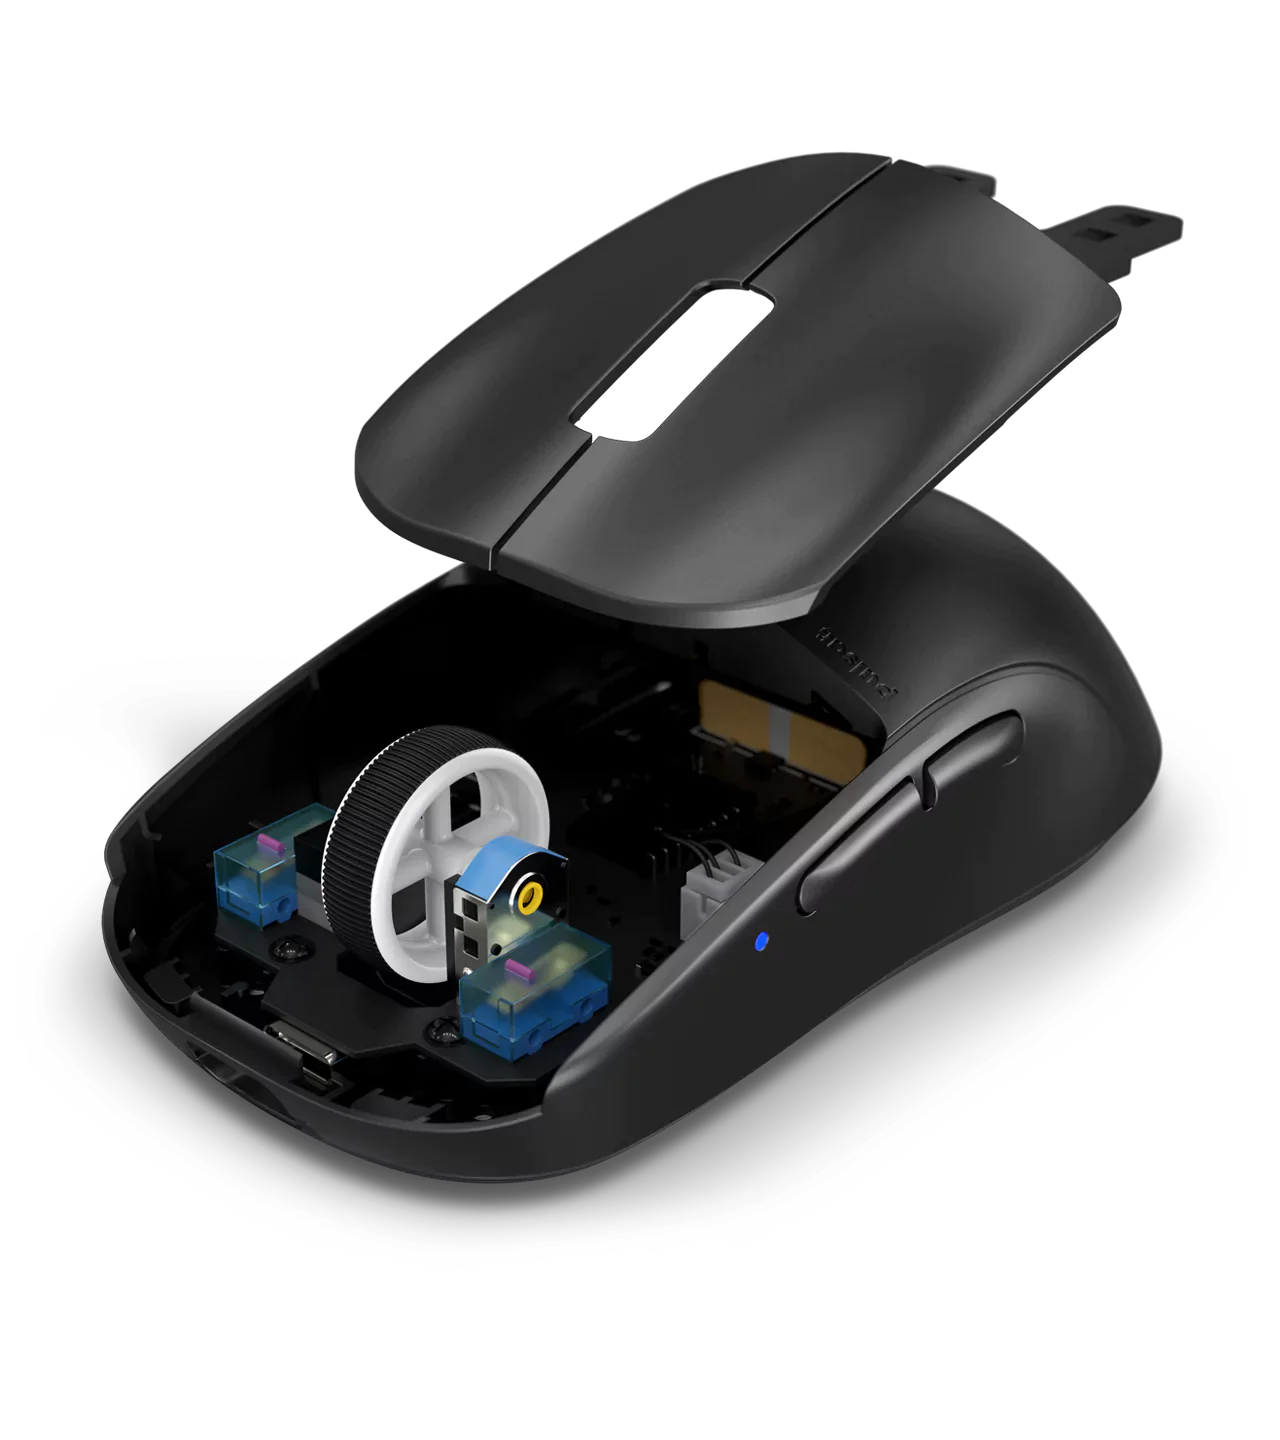 Premium Black Edition] X2 Gaming Mouse – Pulsar Gaming Gears